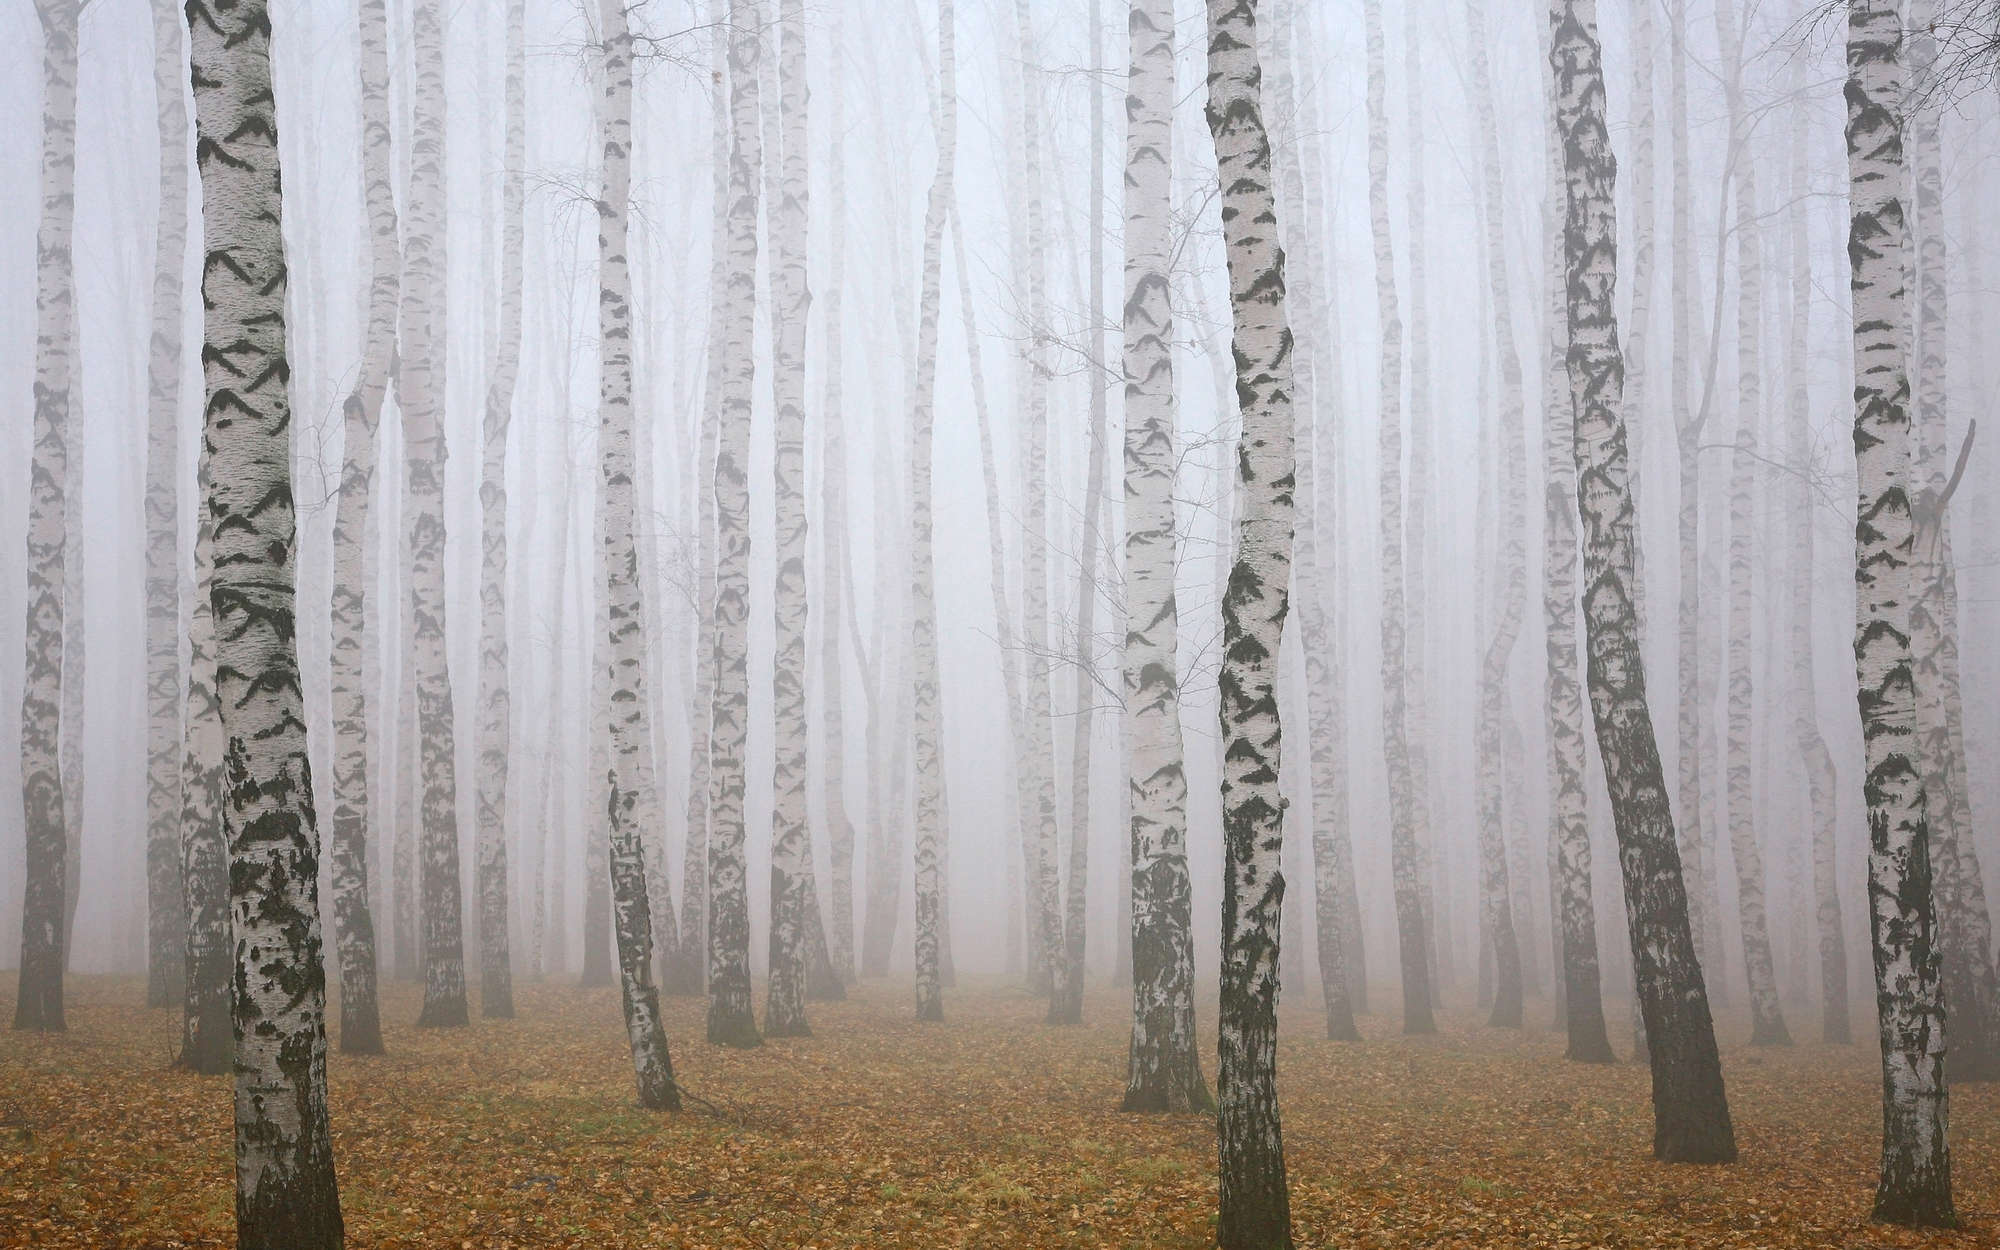             Fototapete Birkenwald im Nebel – Premium Glattvlies
        